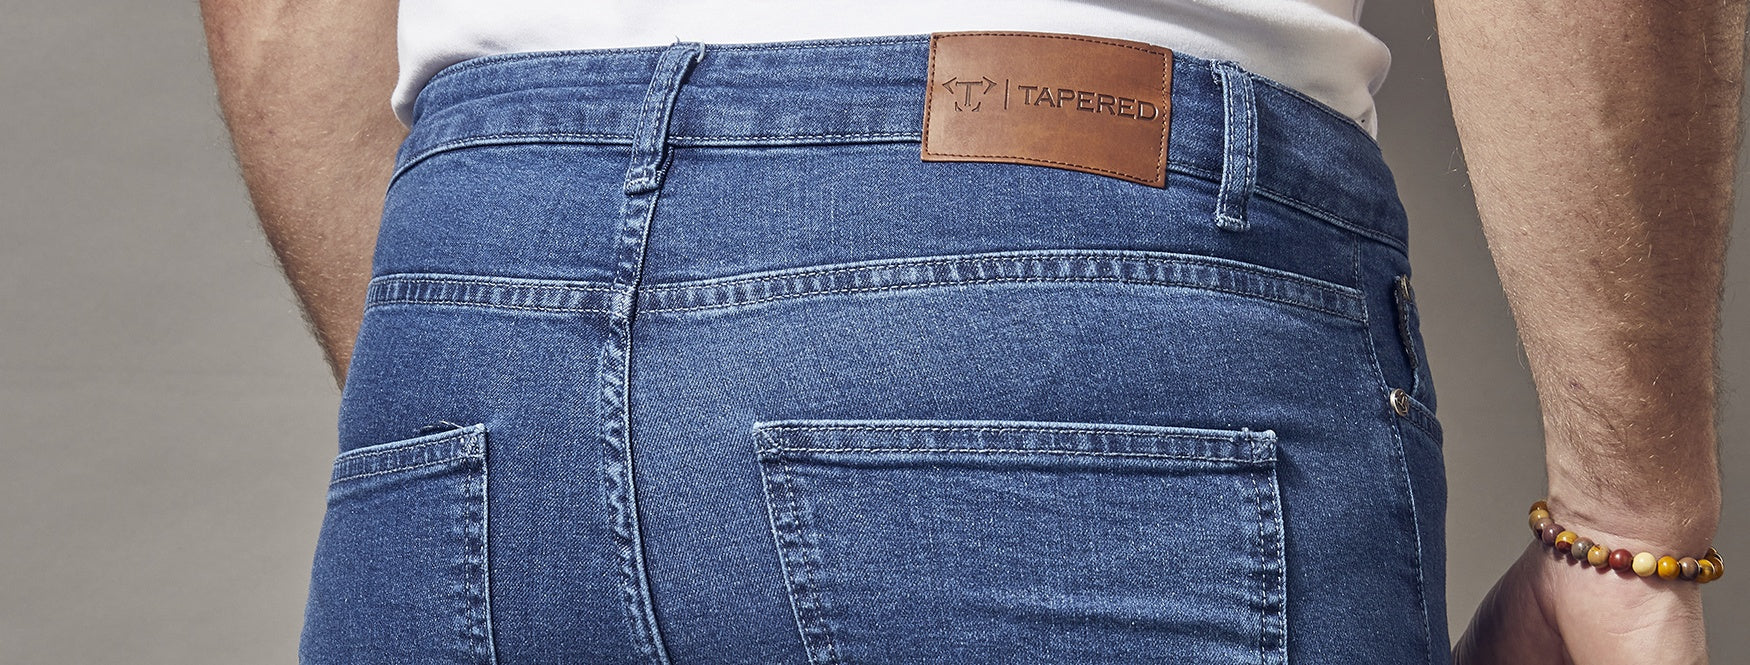 jeans with body shaper｜TikTok Search